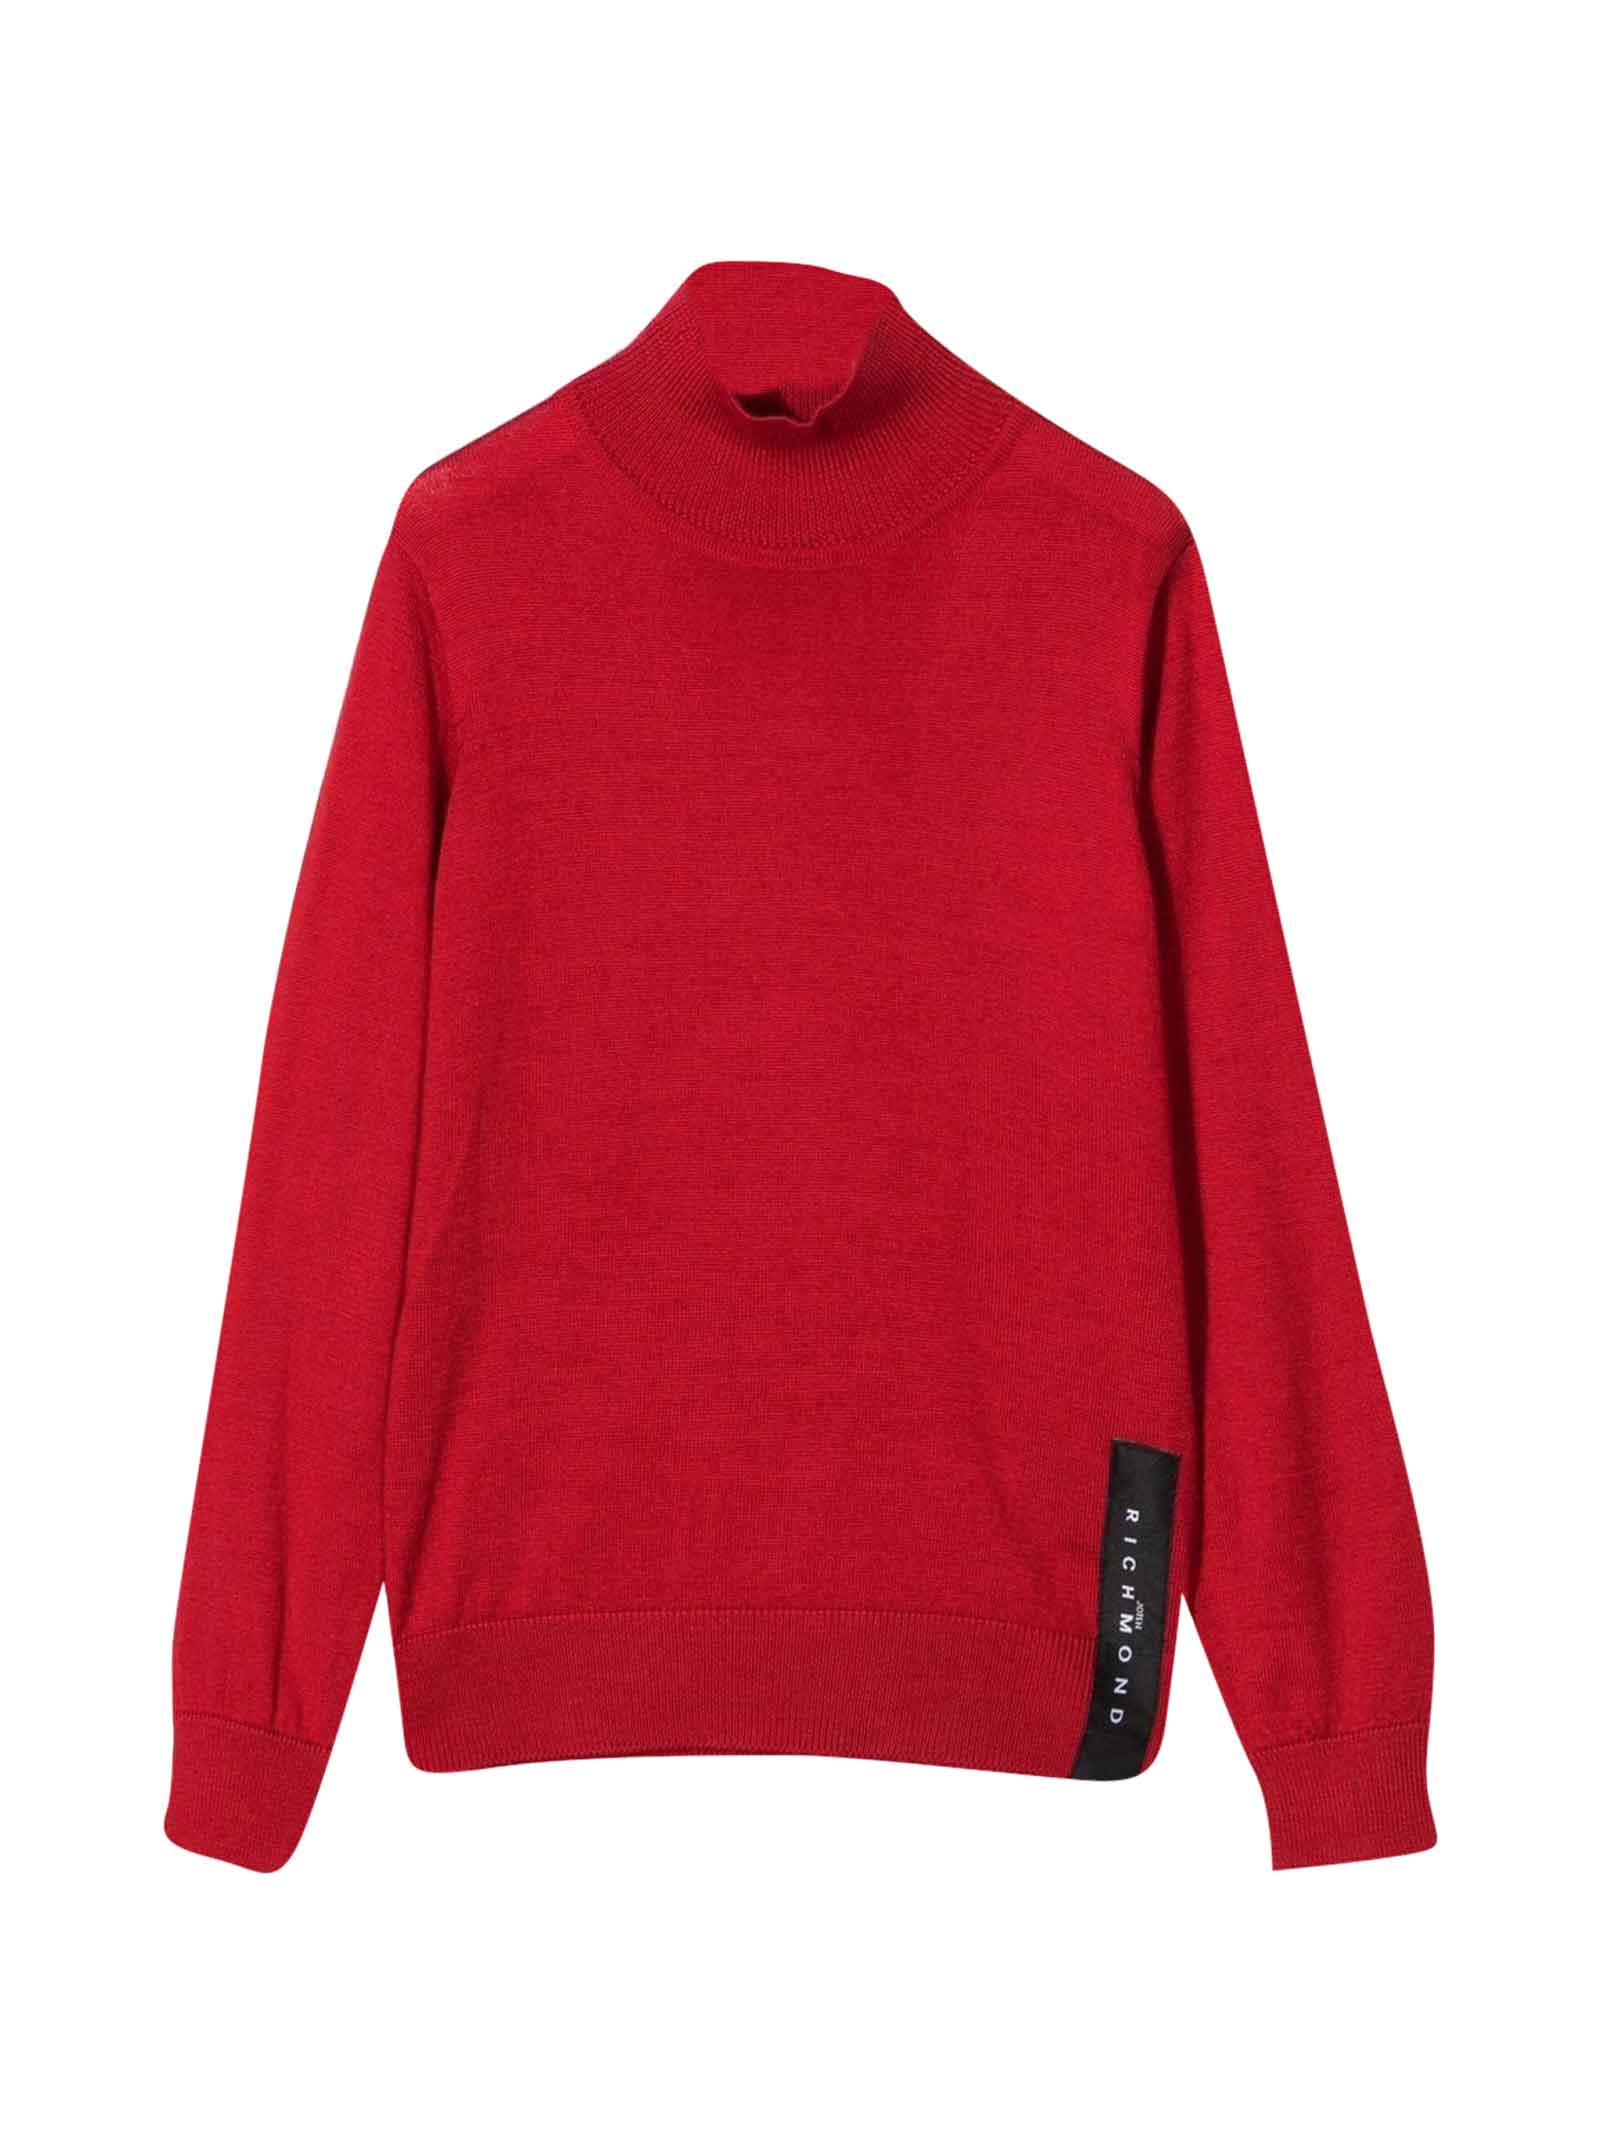 John Richmond Red High Neck Sweater